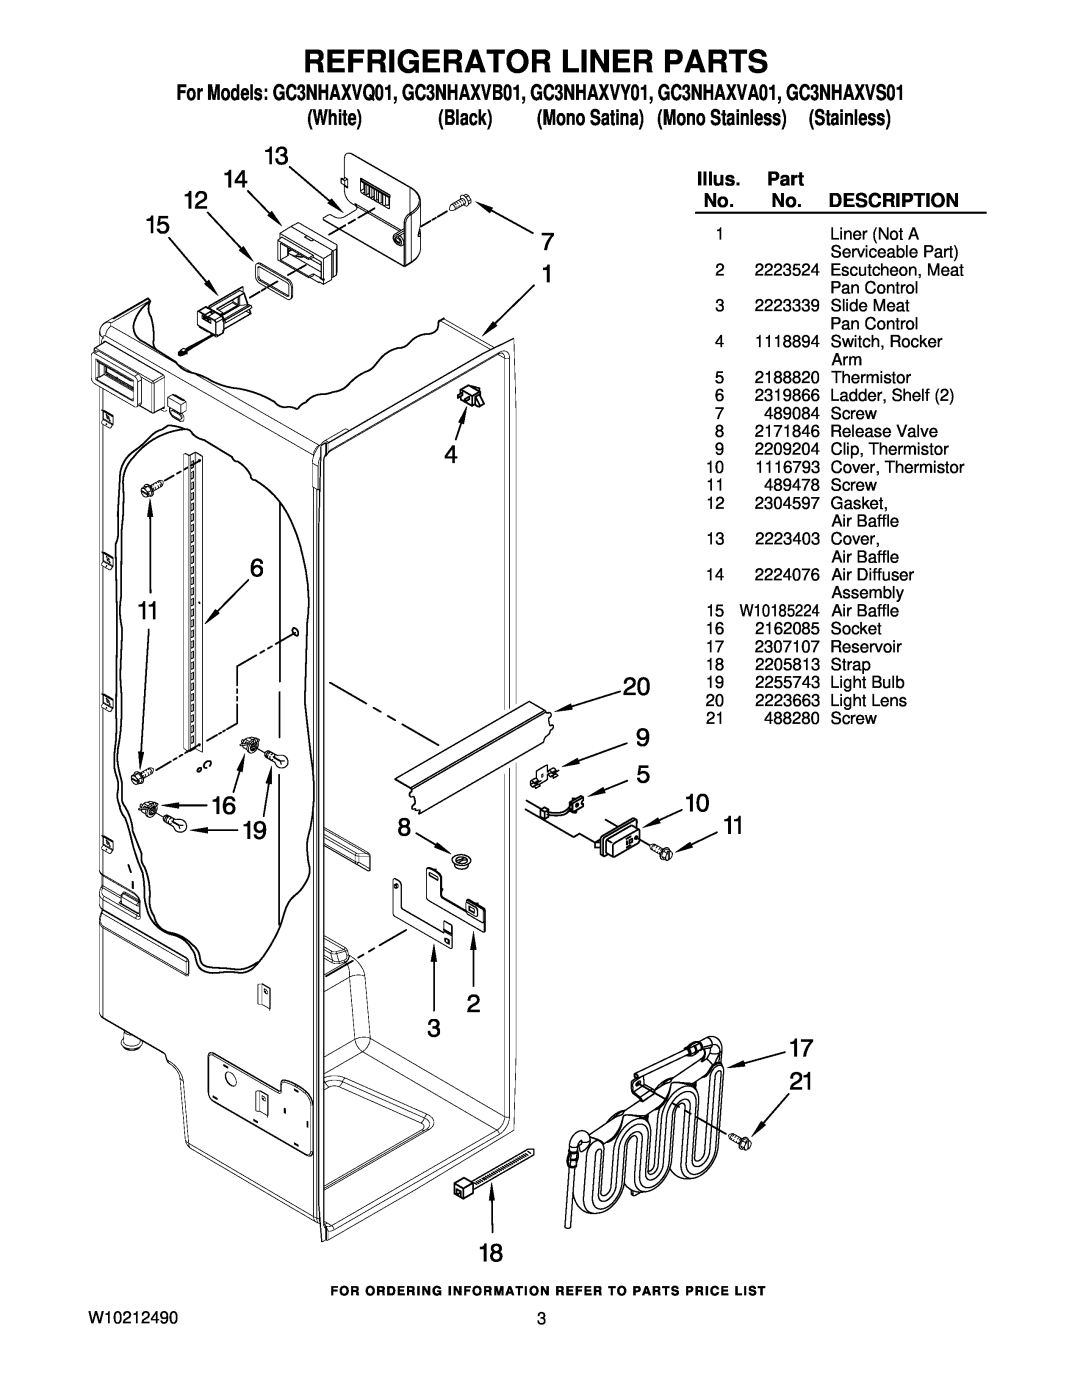 Whirlpool GC3NHAXVB01 Refrigerator Liner Parts, Mono Satina Mono Stainless Stainless, White, Black, Illus, Description 